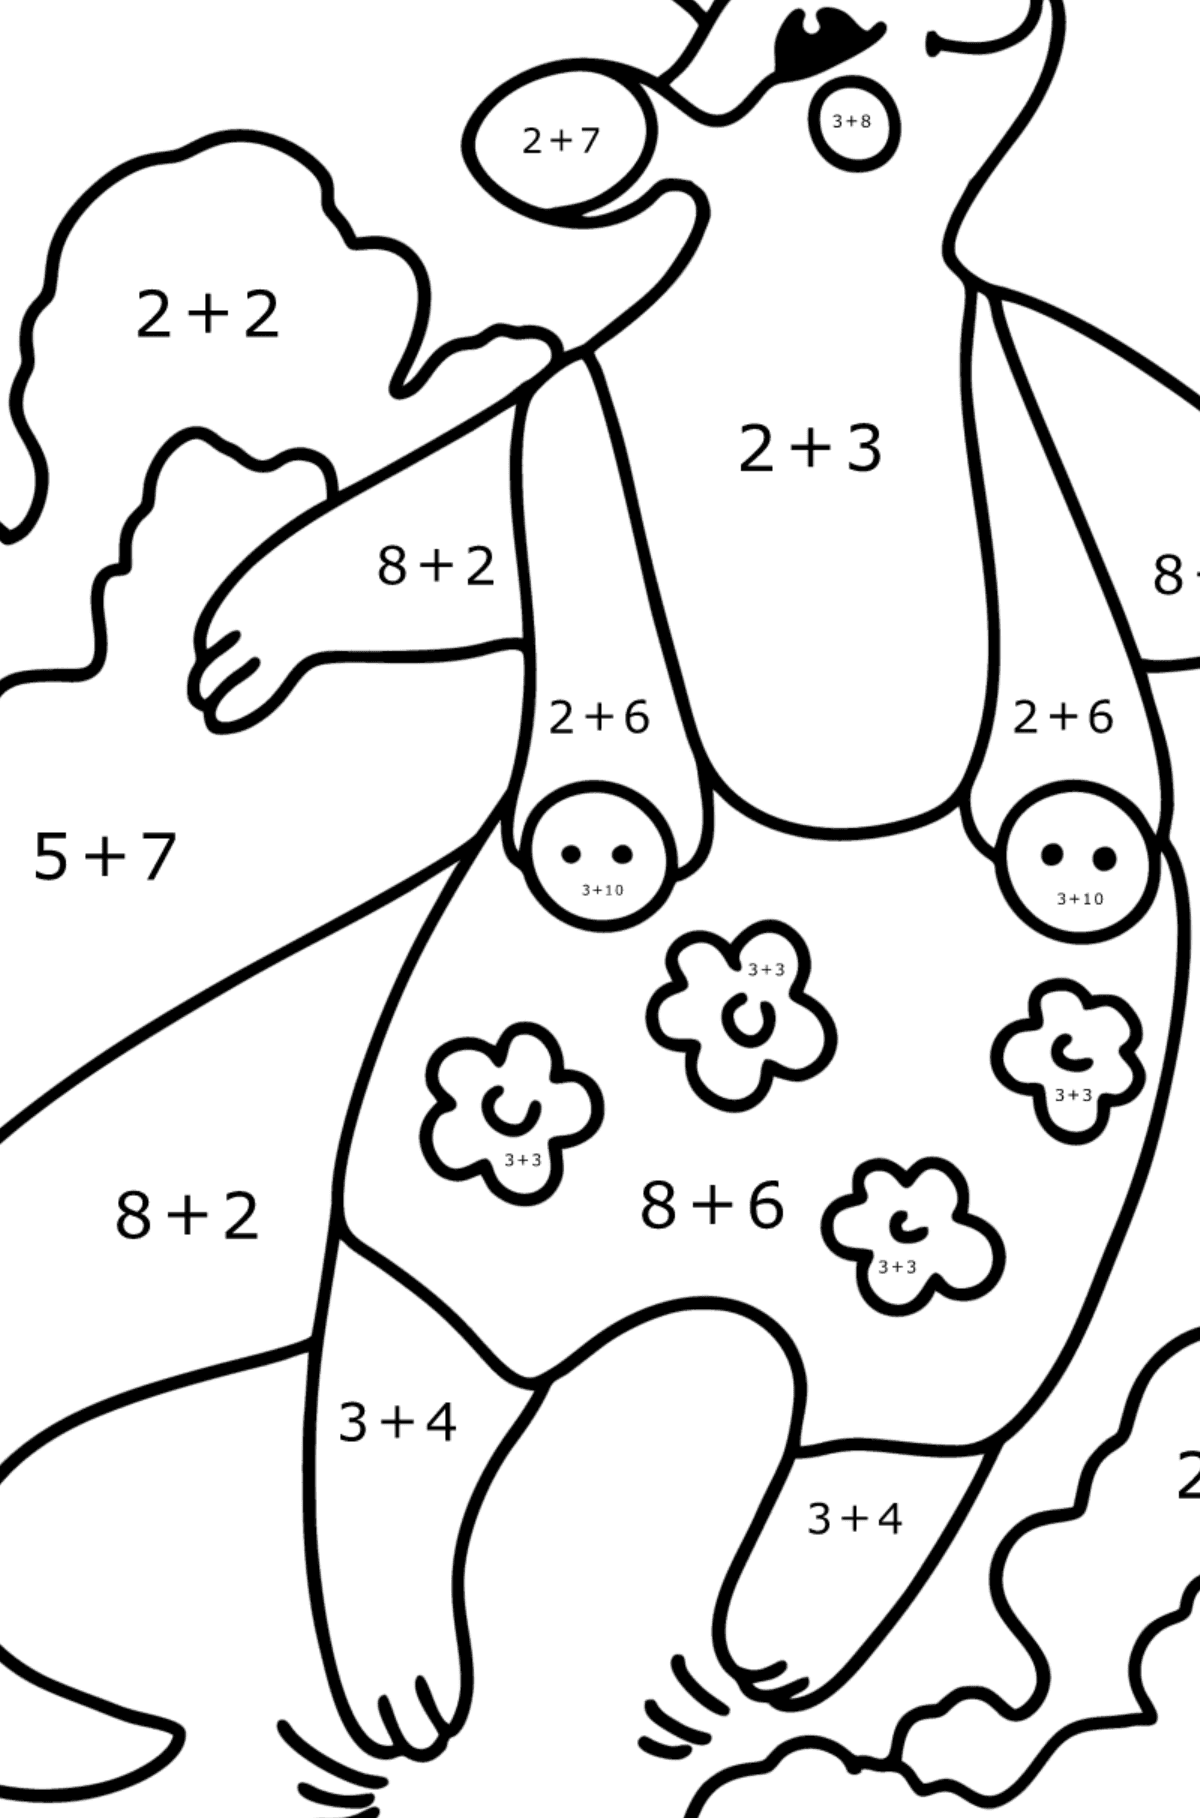 Coloring page - Cartoon Kangaroo jumping - Math Coloring - Addition for Kids